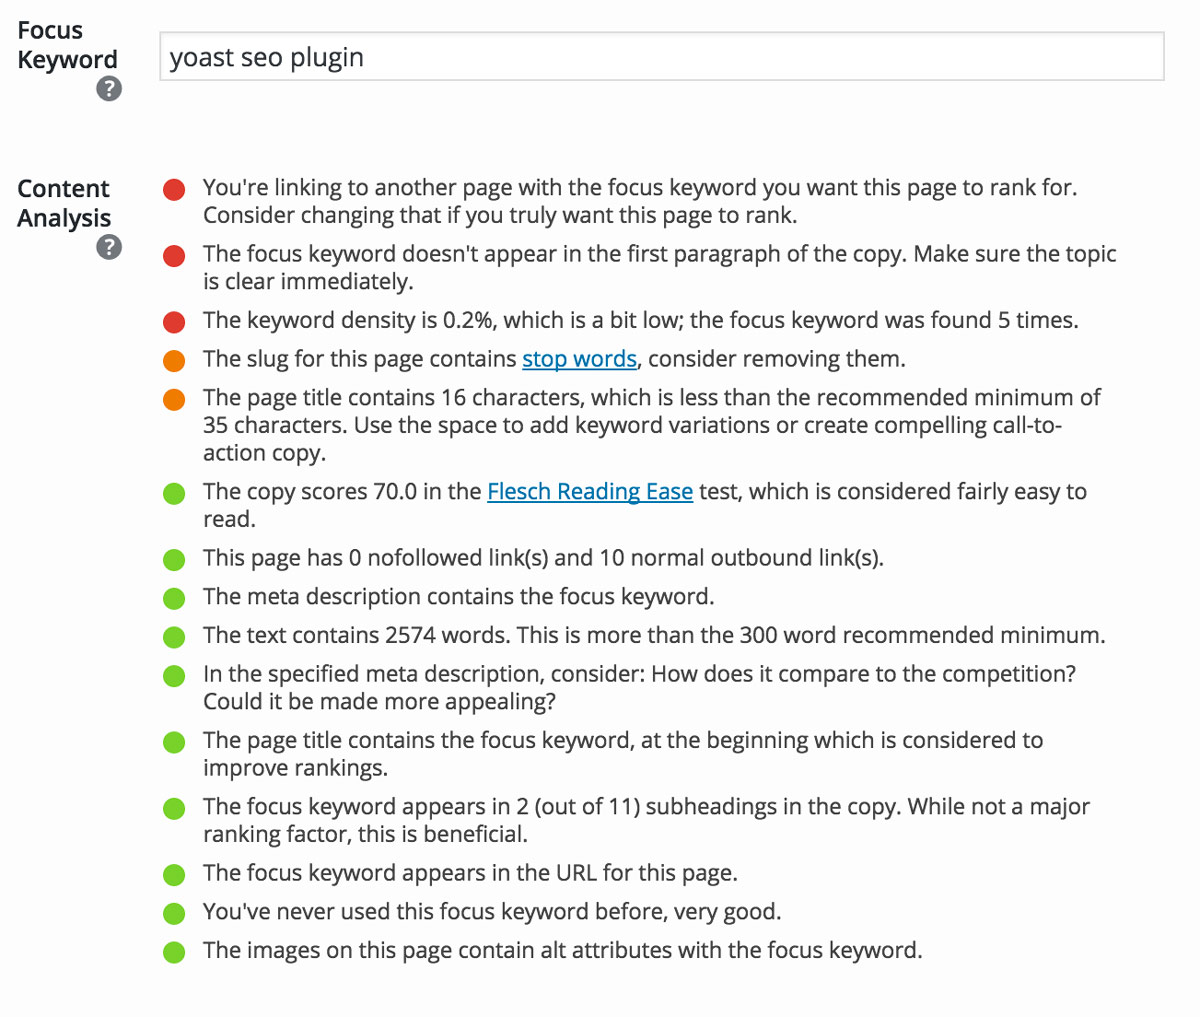 yoast-seo-plugin-toolbox-content-analysis